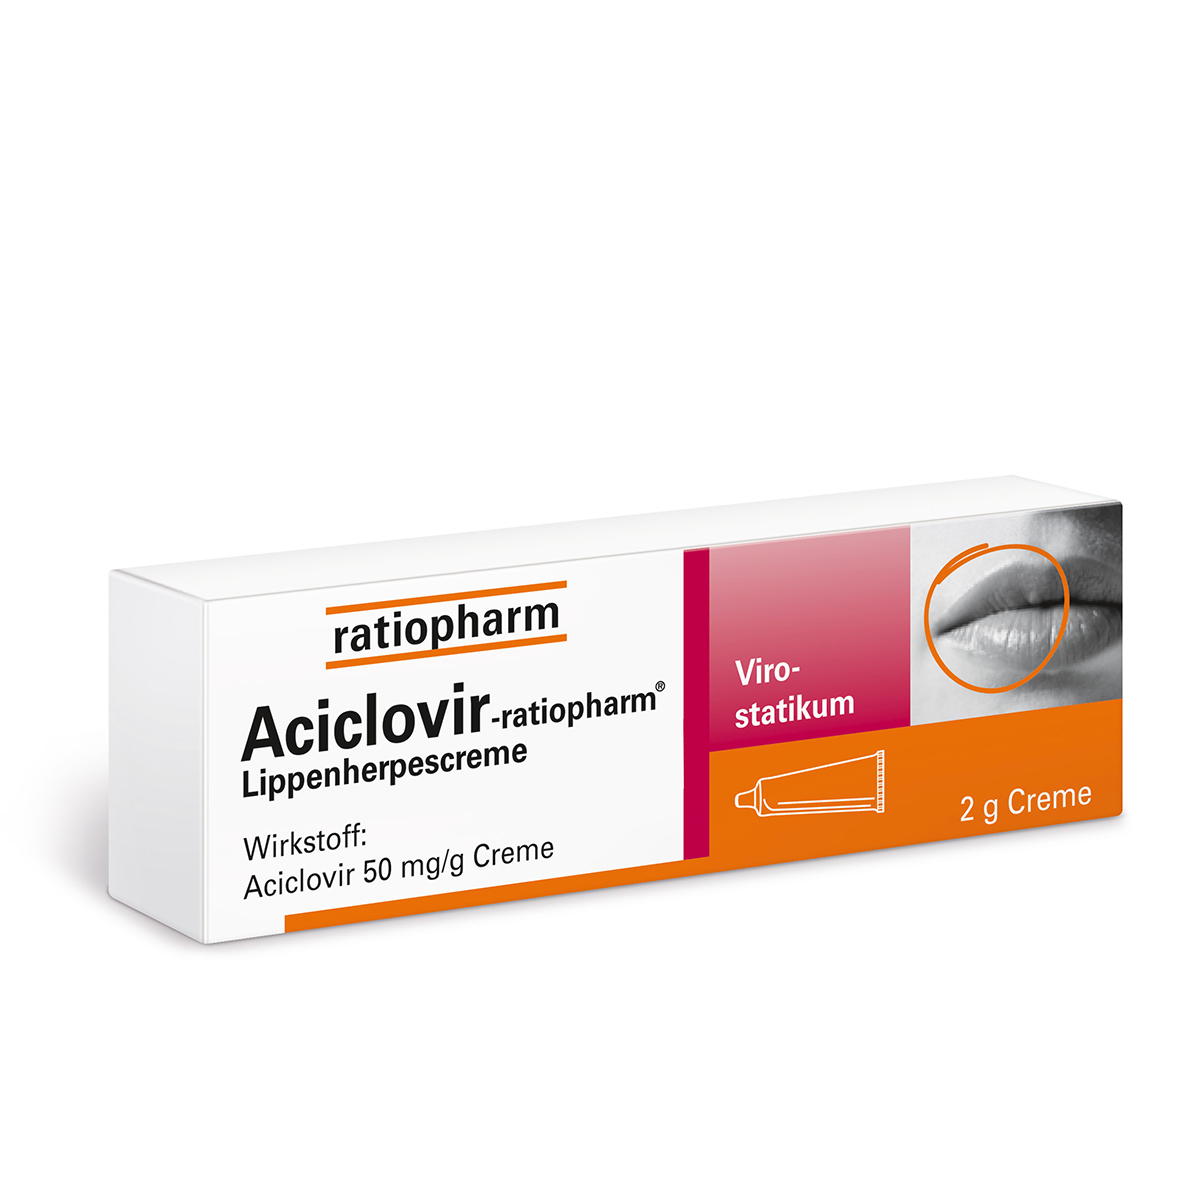 Aciclovir ratiopharm Ацикловир ратиофарм ,крем от герпеса 2 грамма